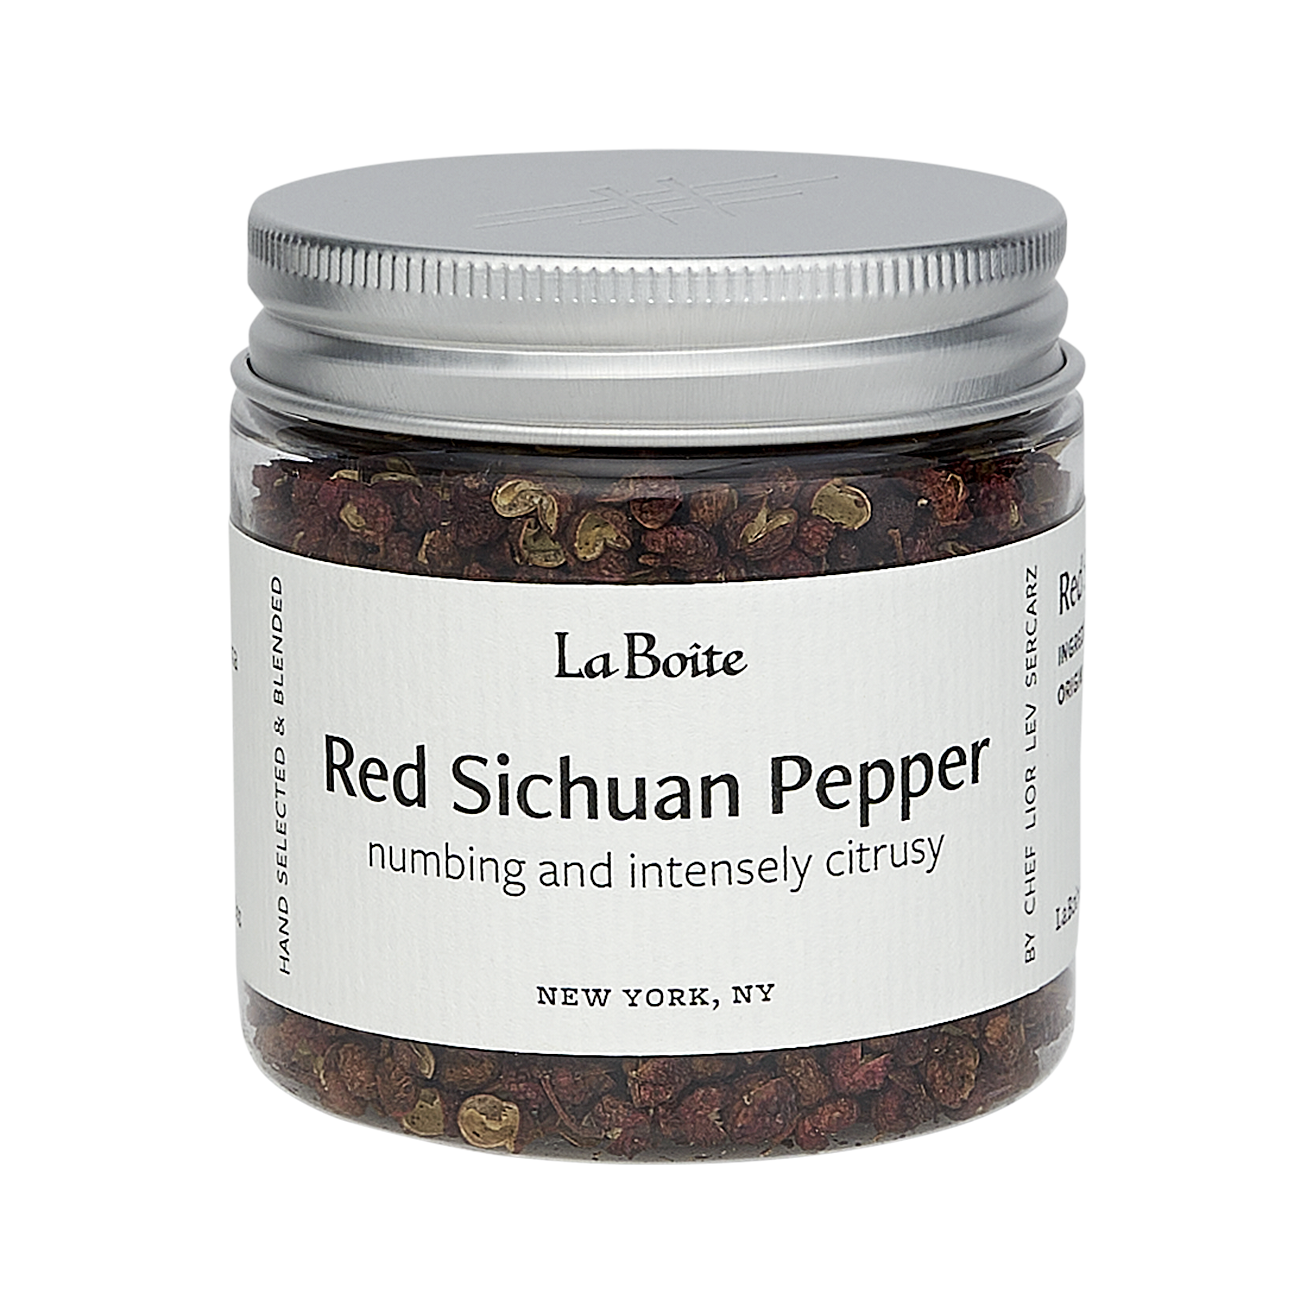 Red Sichuan Pepper